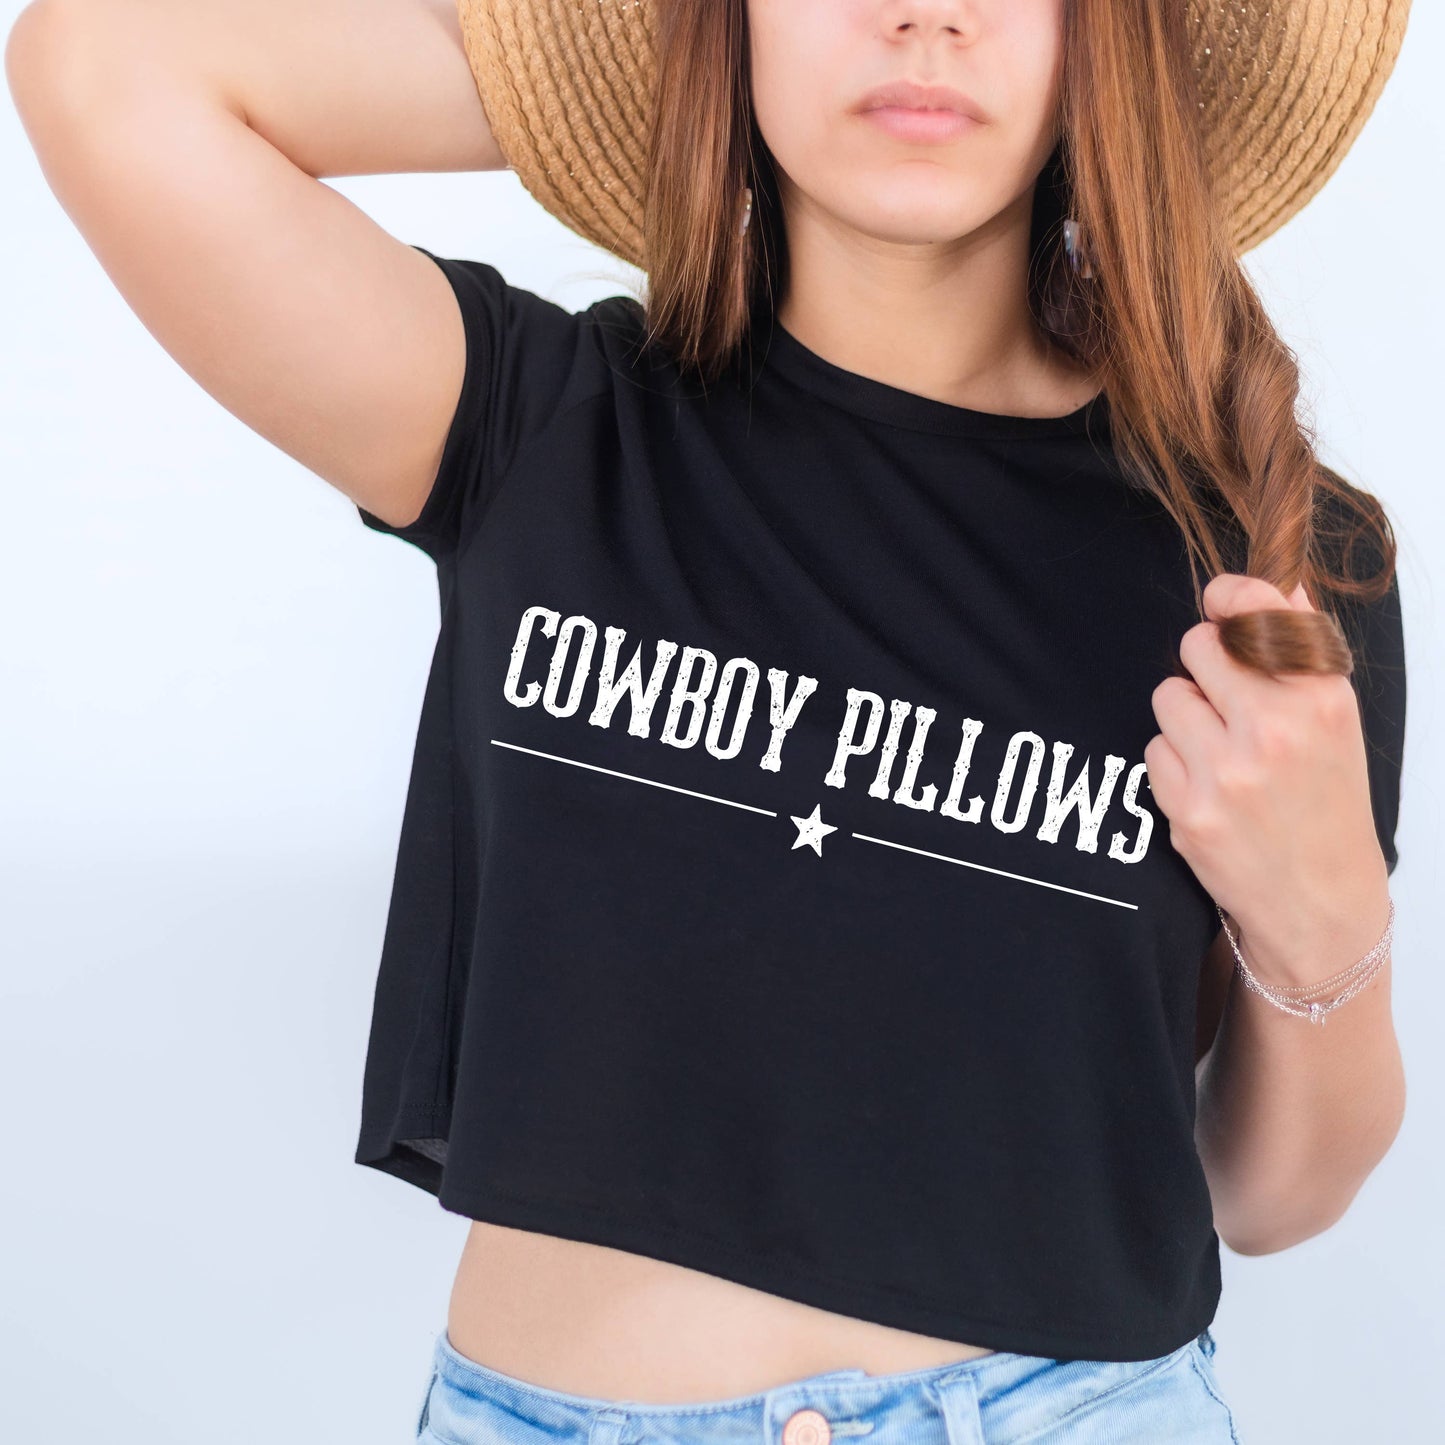 Cowboy Pillows Graphic Tee